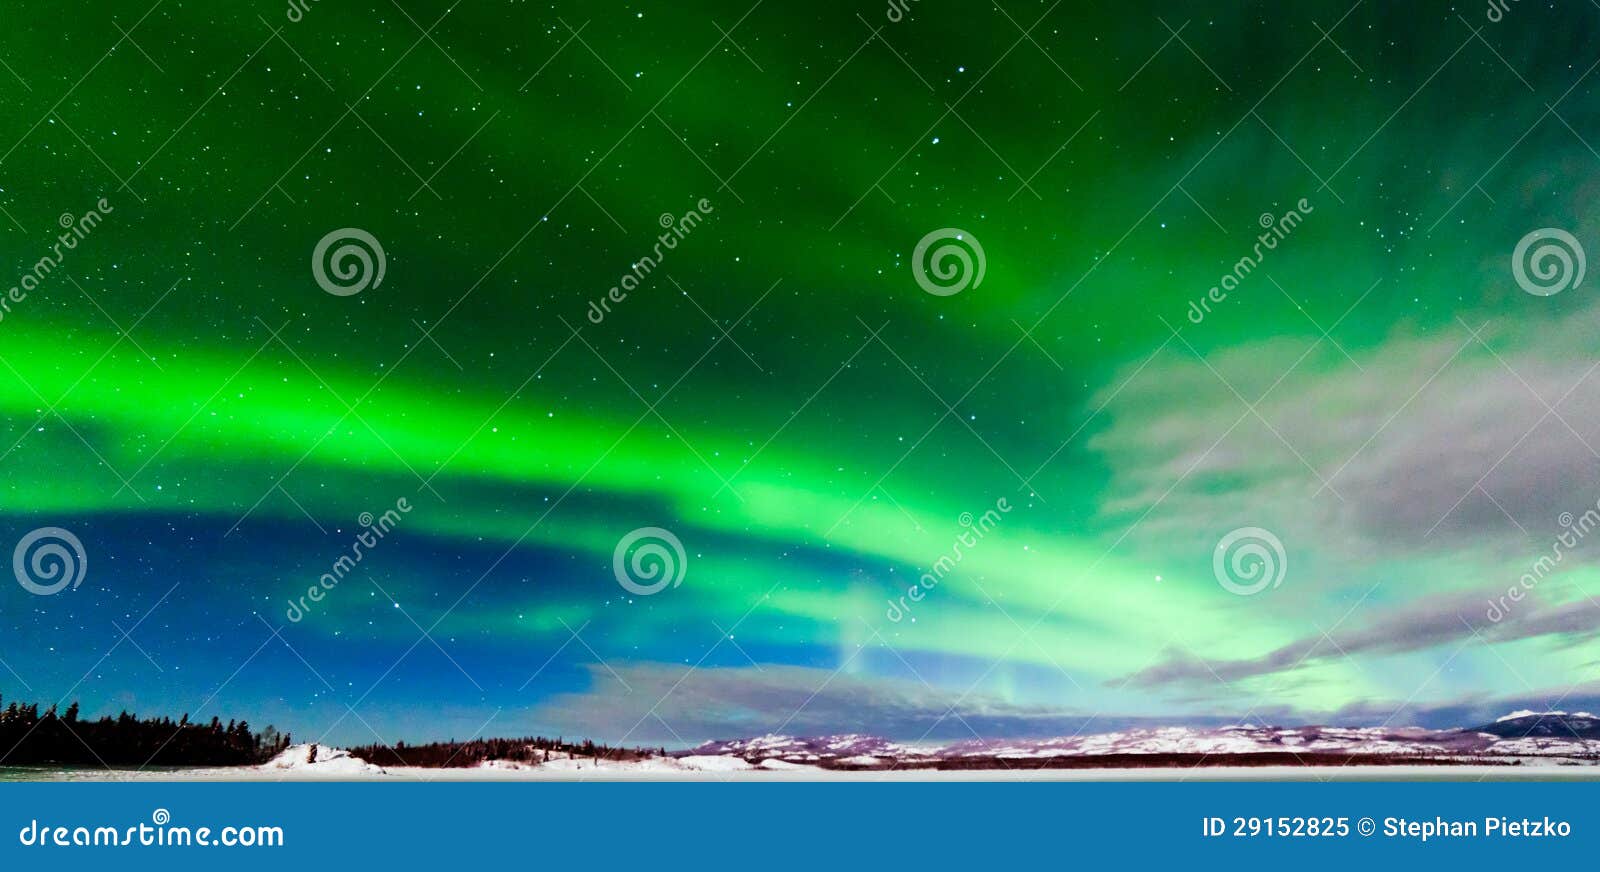 intense display of northern lights aurora borealis